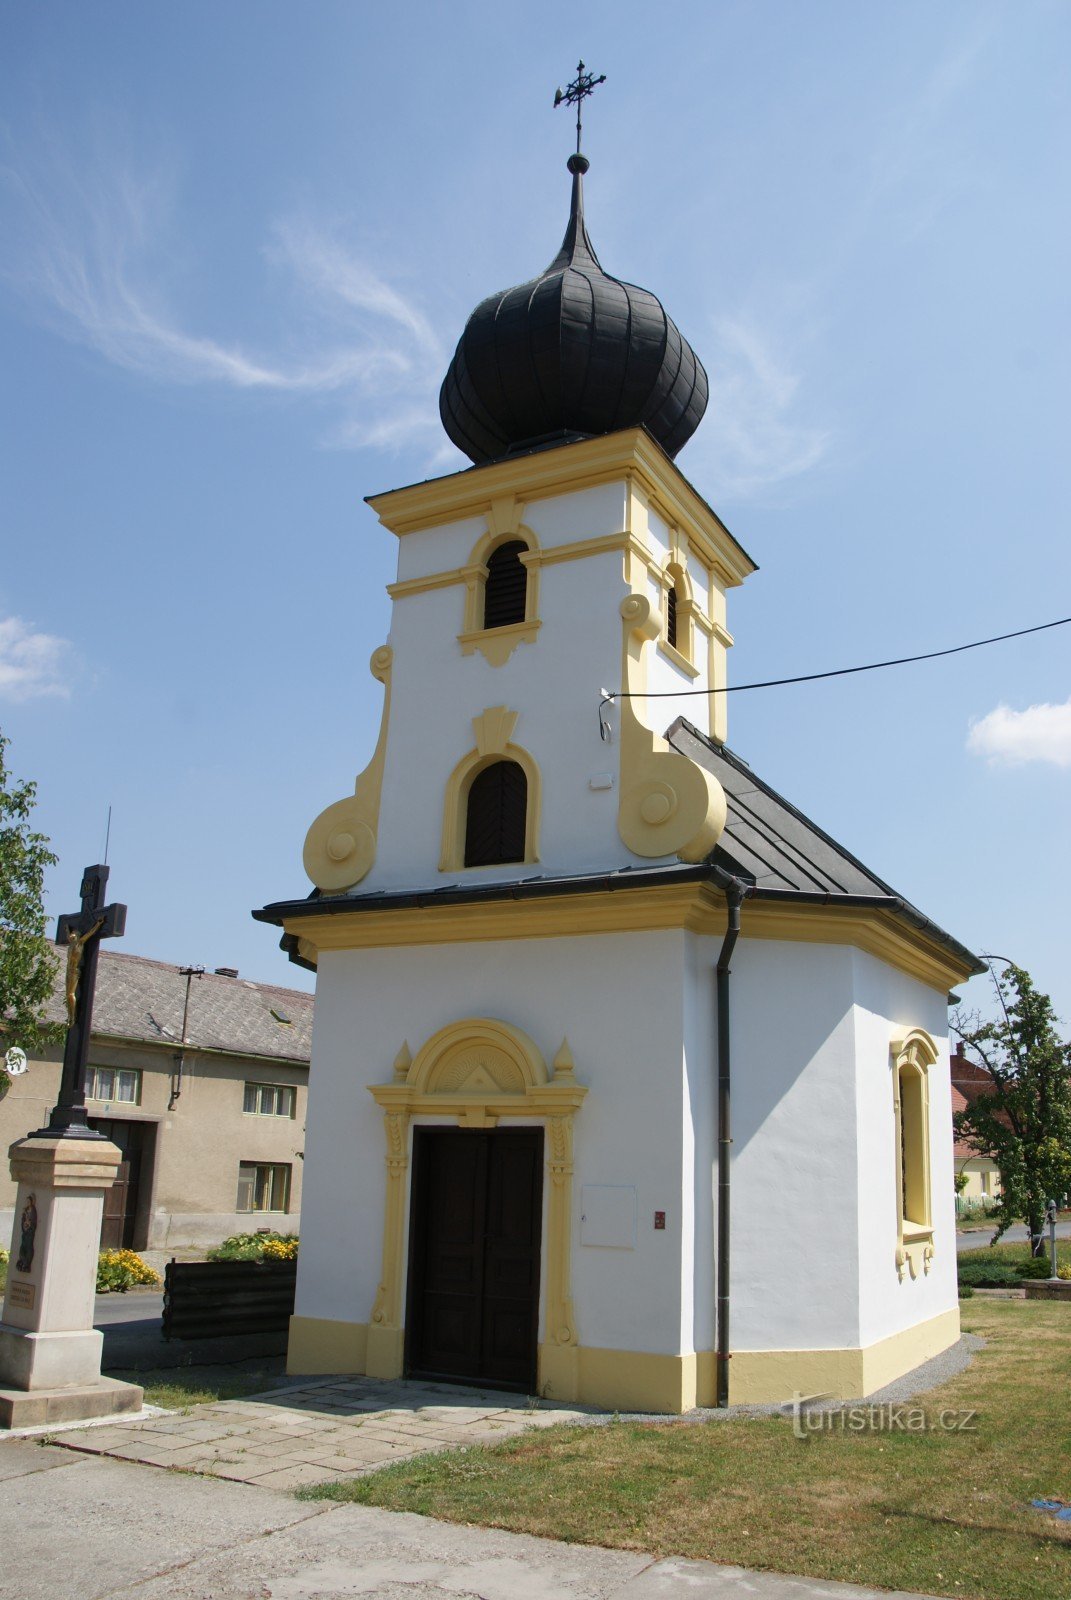 Bílovice - Chapel of St. Floriana